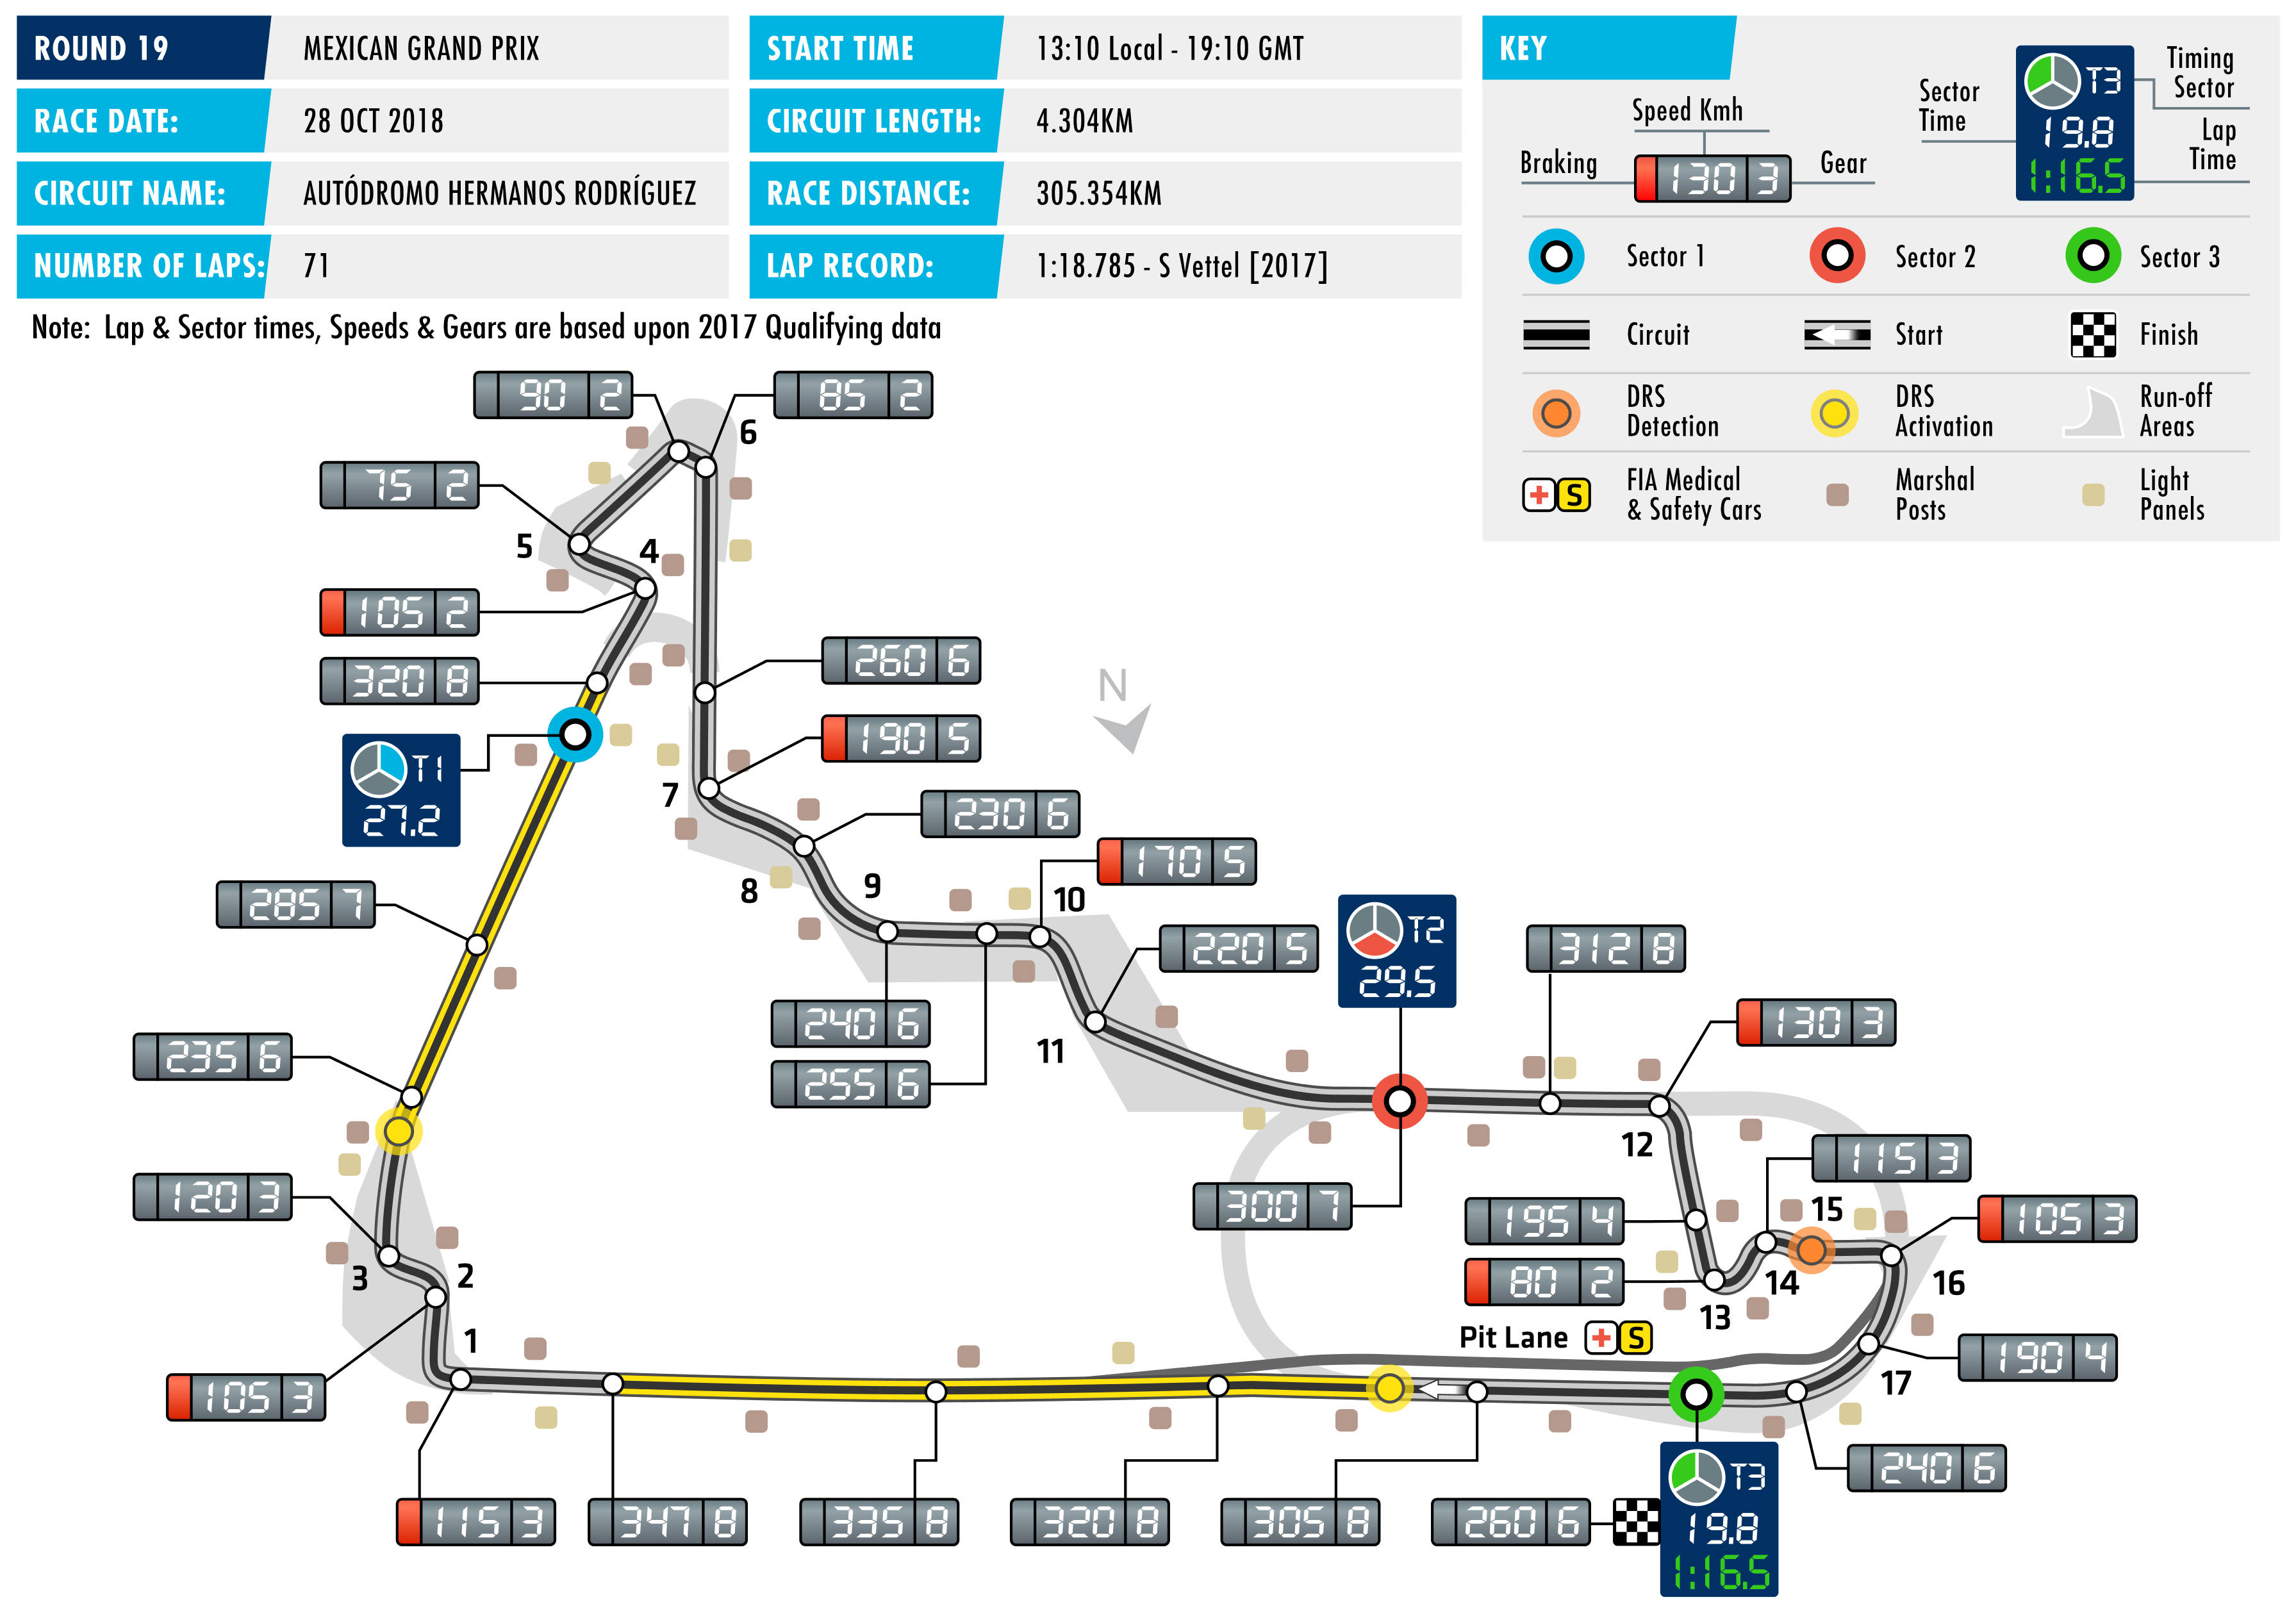 2018 Mexican Grand Prix - Circuit Map